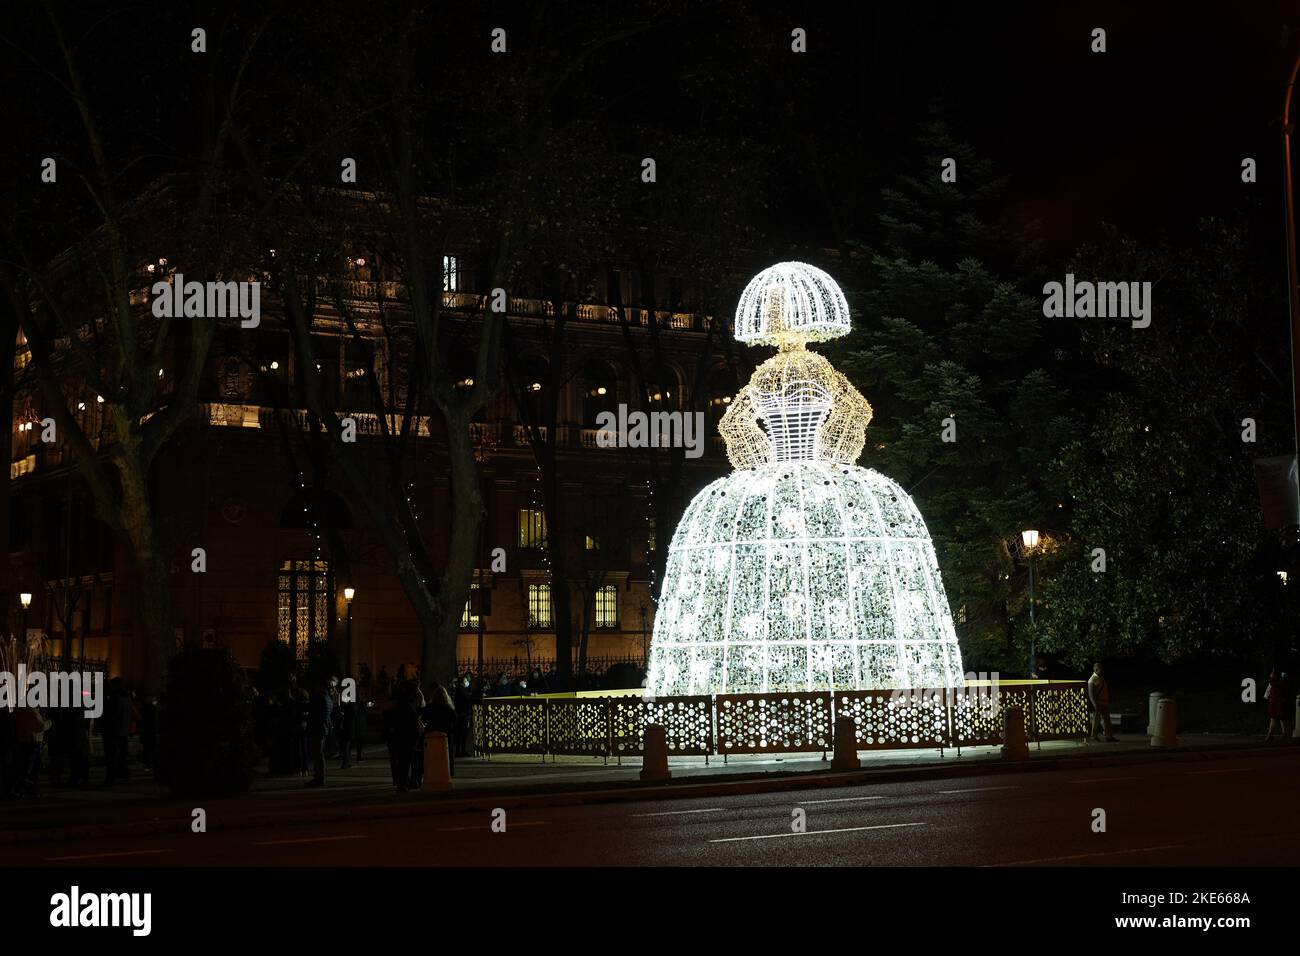 Madrid, Spain- December 28th, 2021, Christmas lights in the shape of Velazquez's Menina. Stock Photo